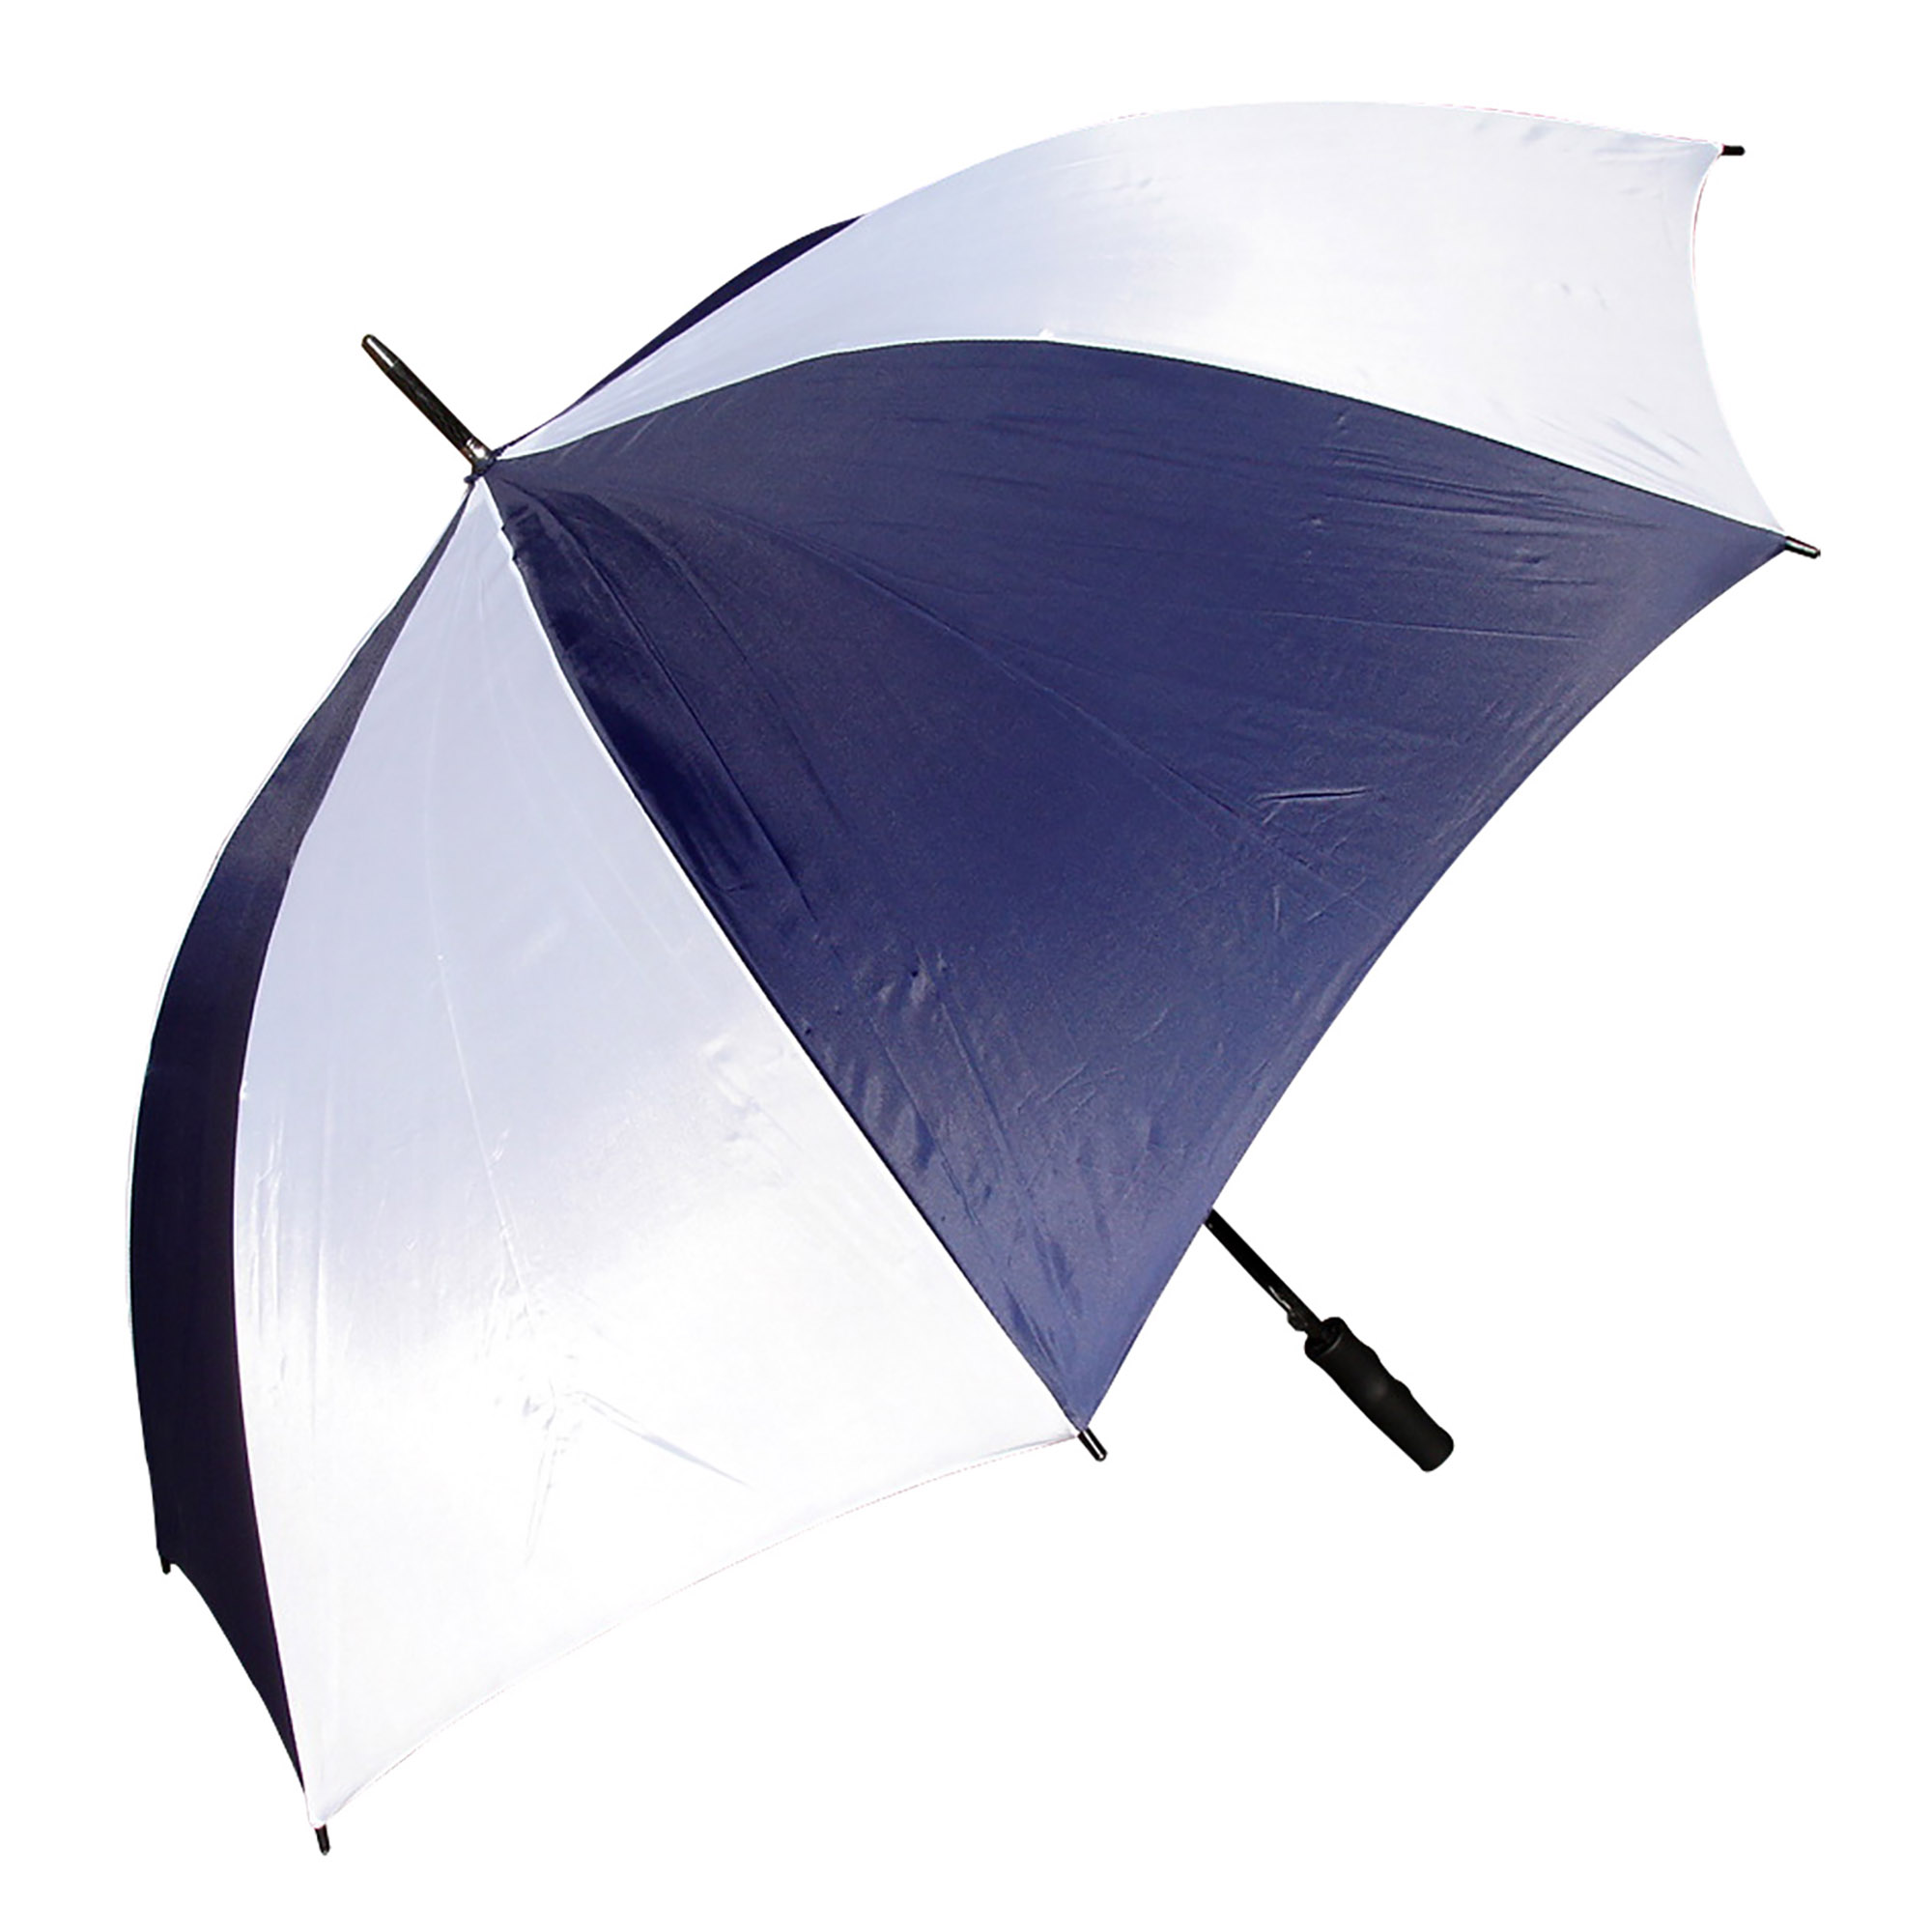 Bulk Promotional Navy Blue White Sands Umbrella Online In Perth Australia